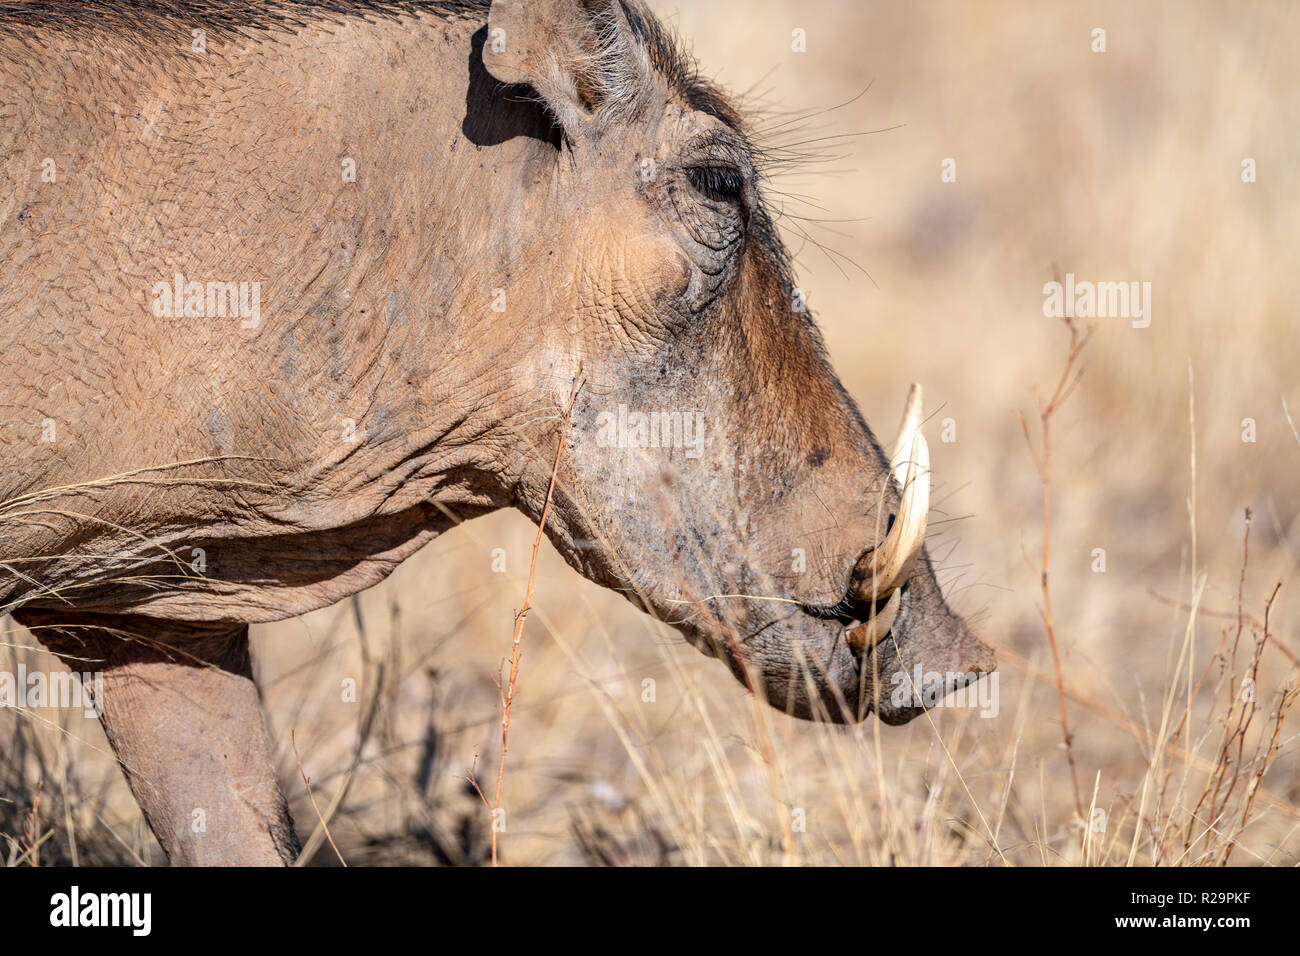 Common warthog (Phacochoeerus africanus) in Kenya, eastern Africa Stock Photo